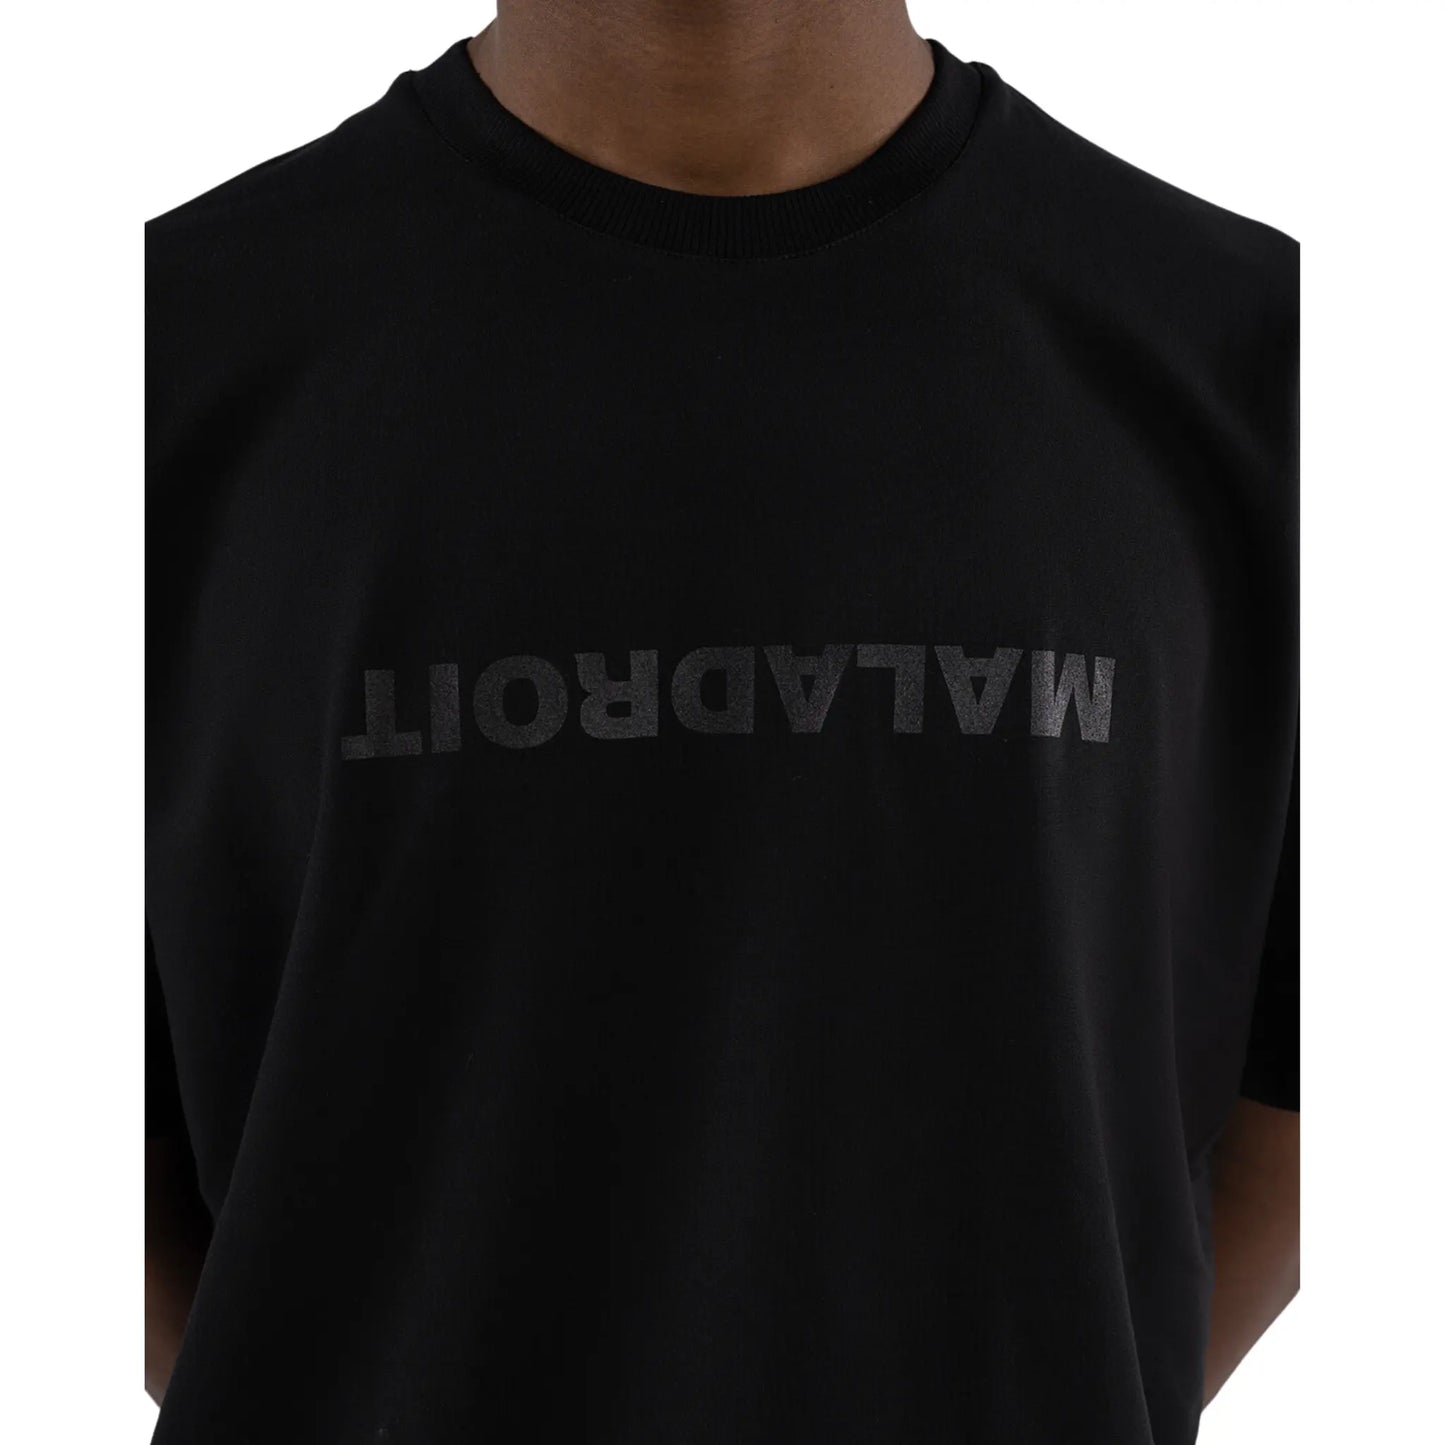 LES MALADROITS Oversized T-Shirt Black Maladroits Reversed close-up view on print